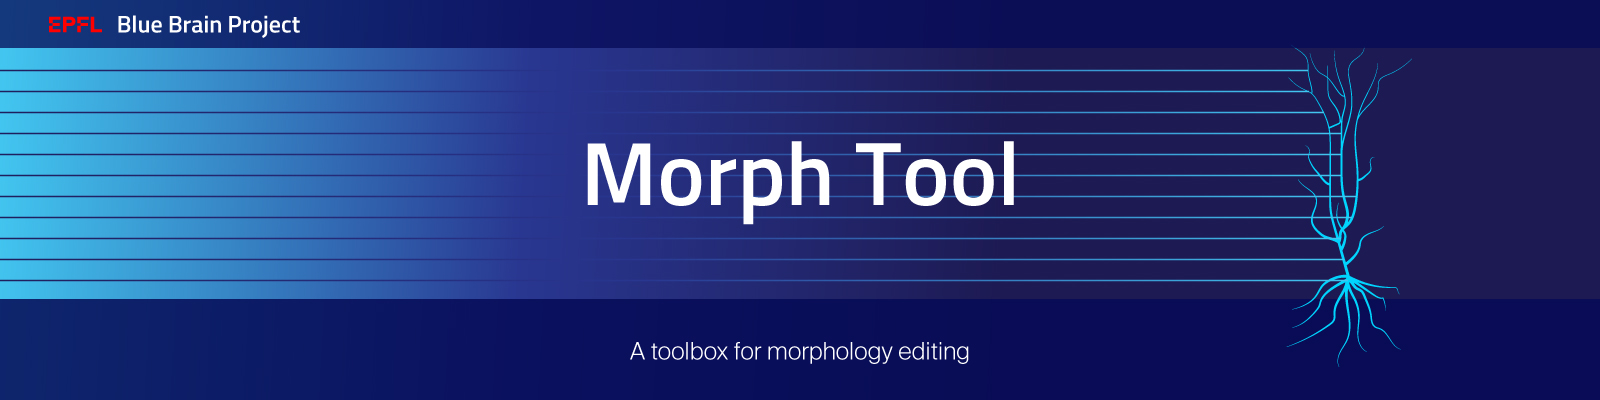 _images/BBP-Morph-Tool.jpg